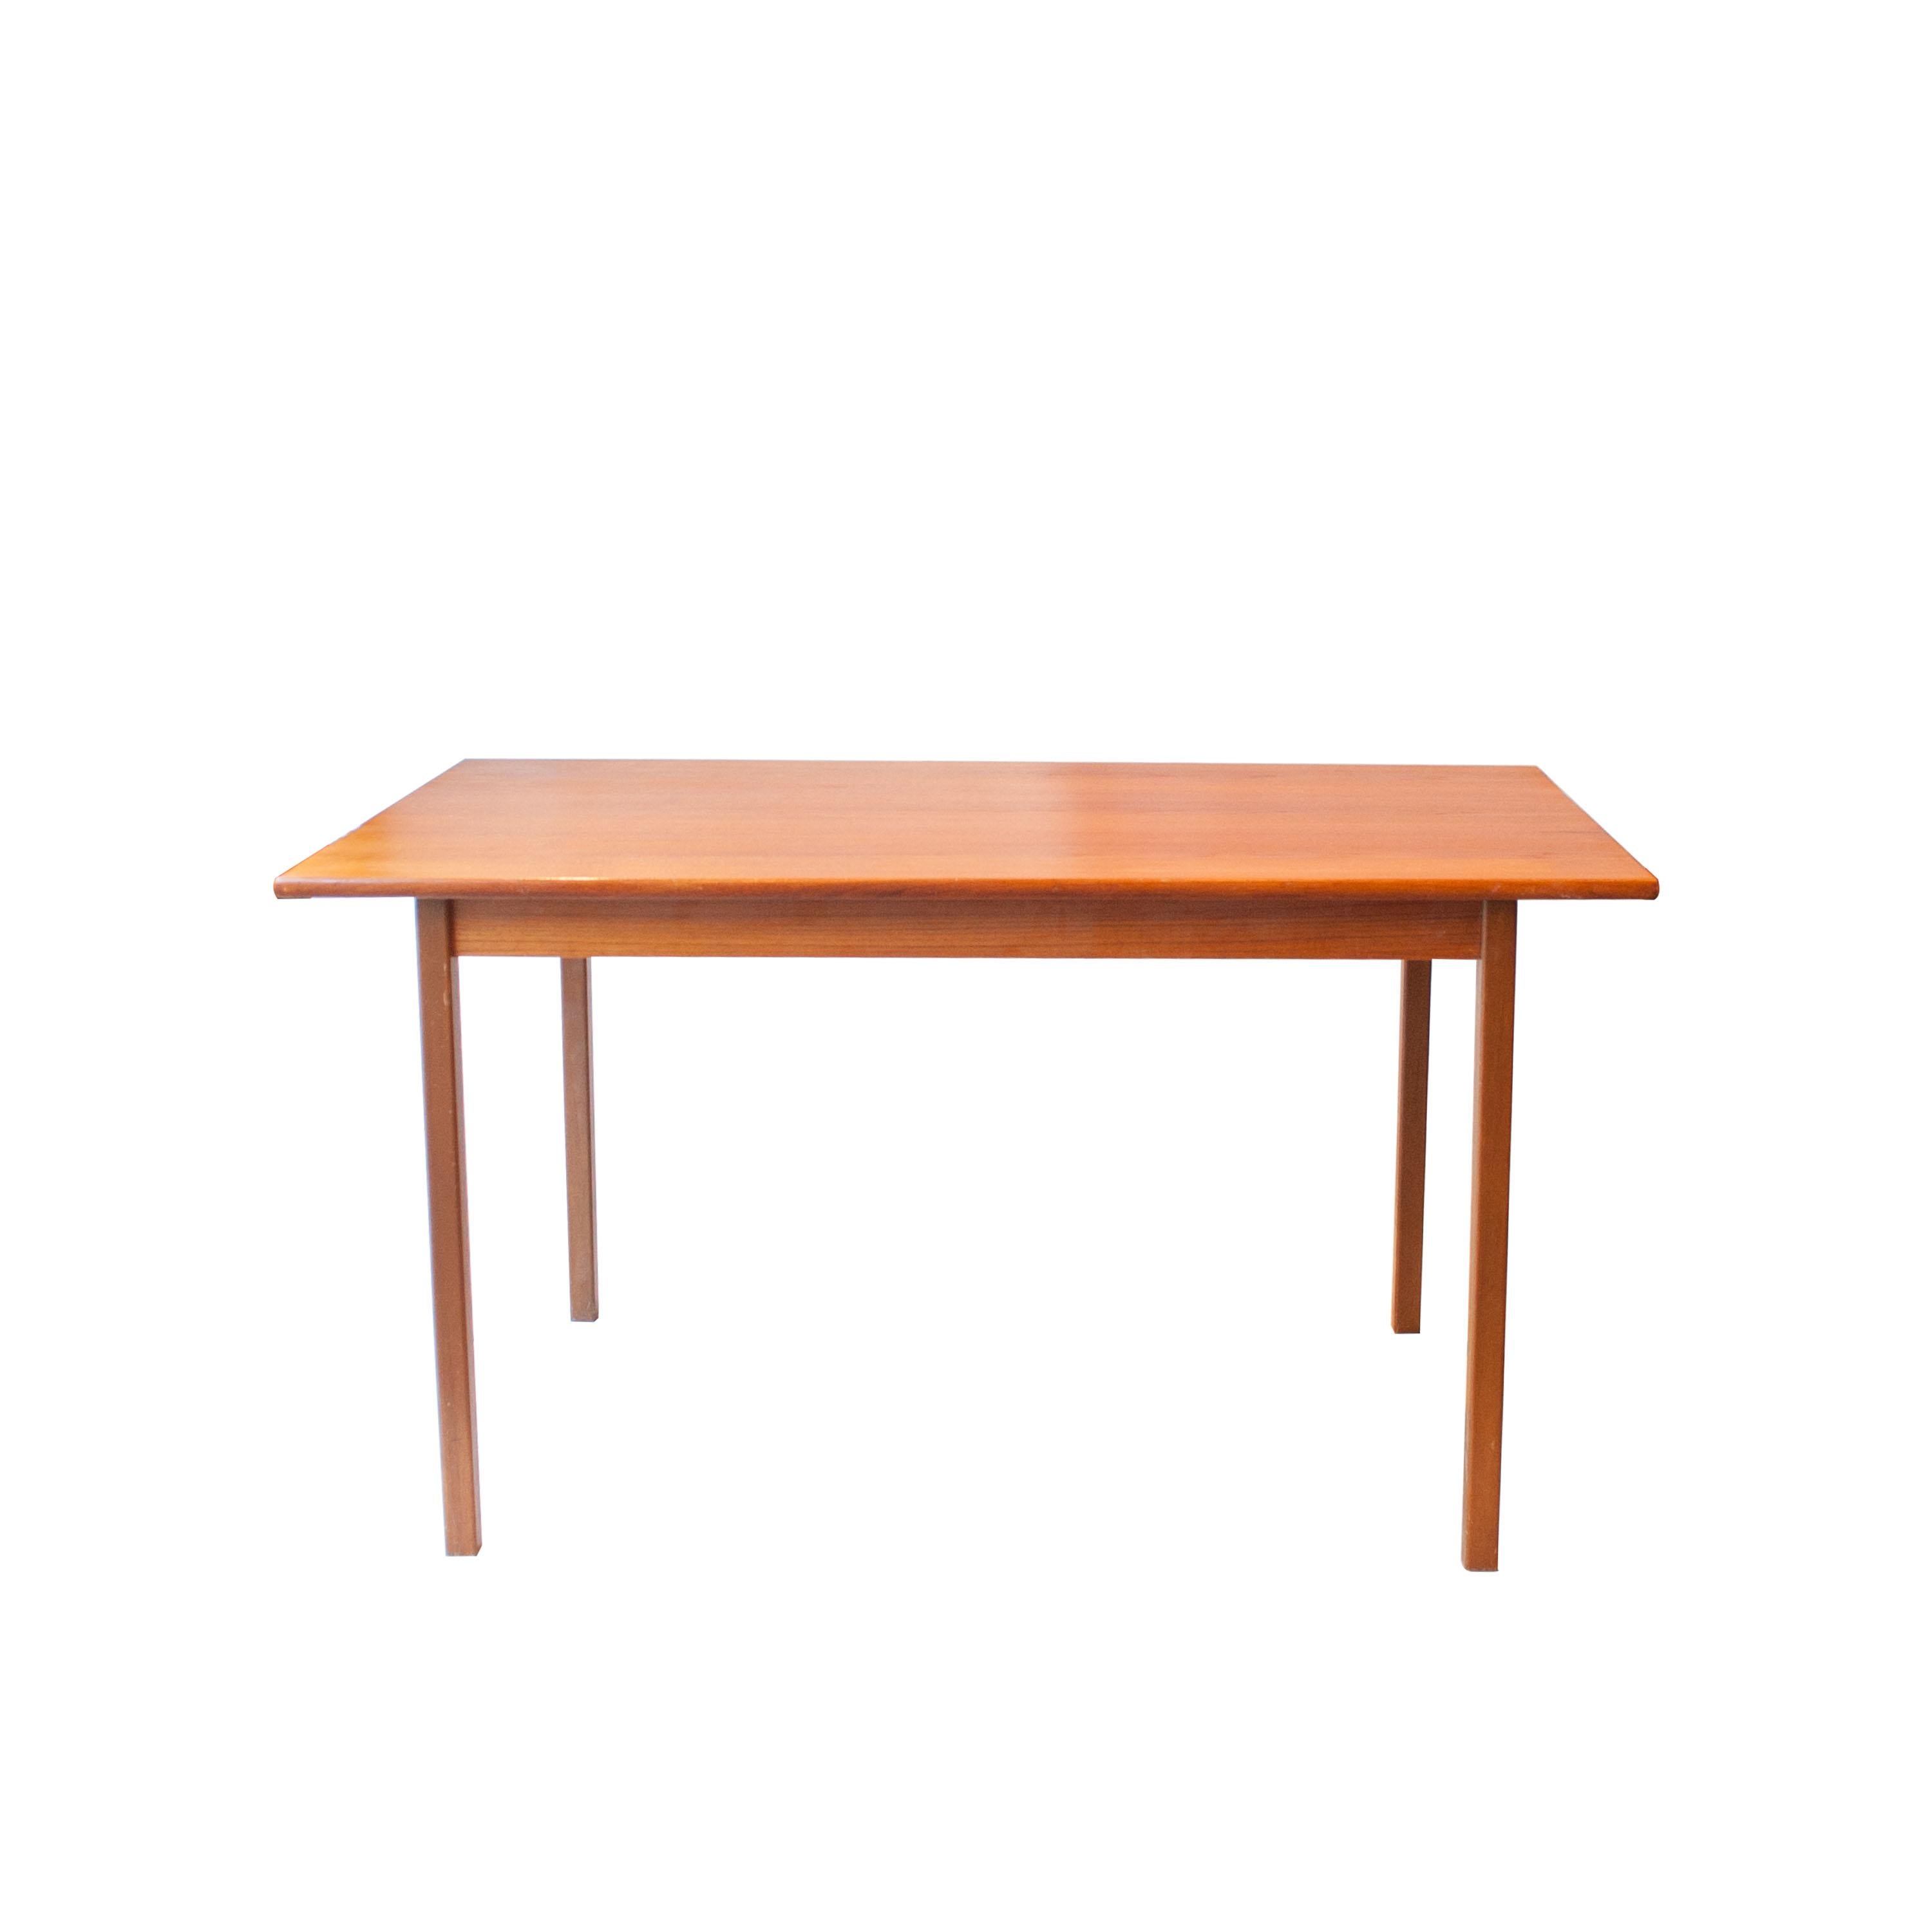 Rectangular Swedish dining table made of teak wood.